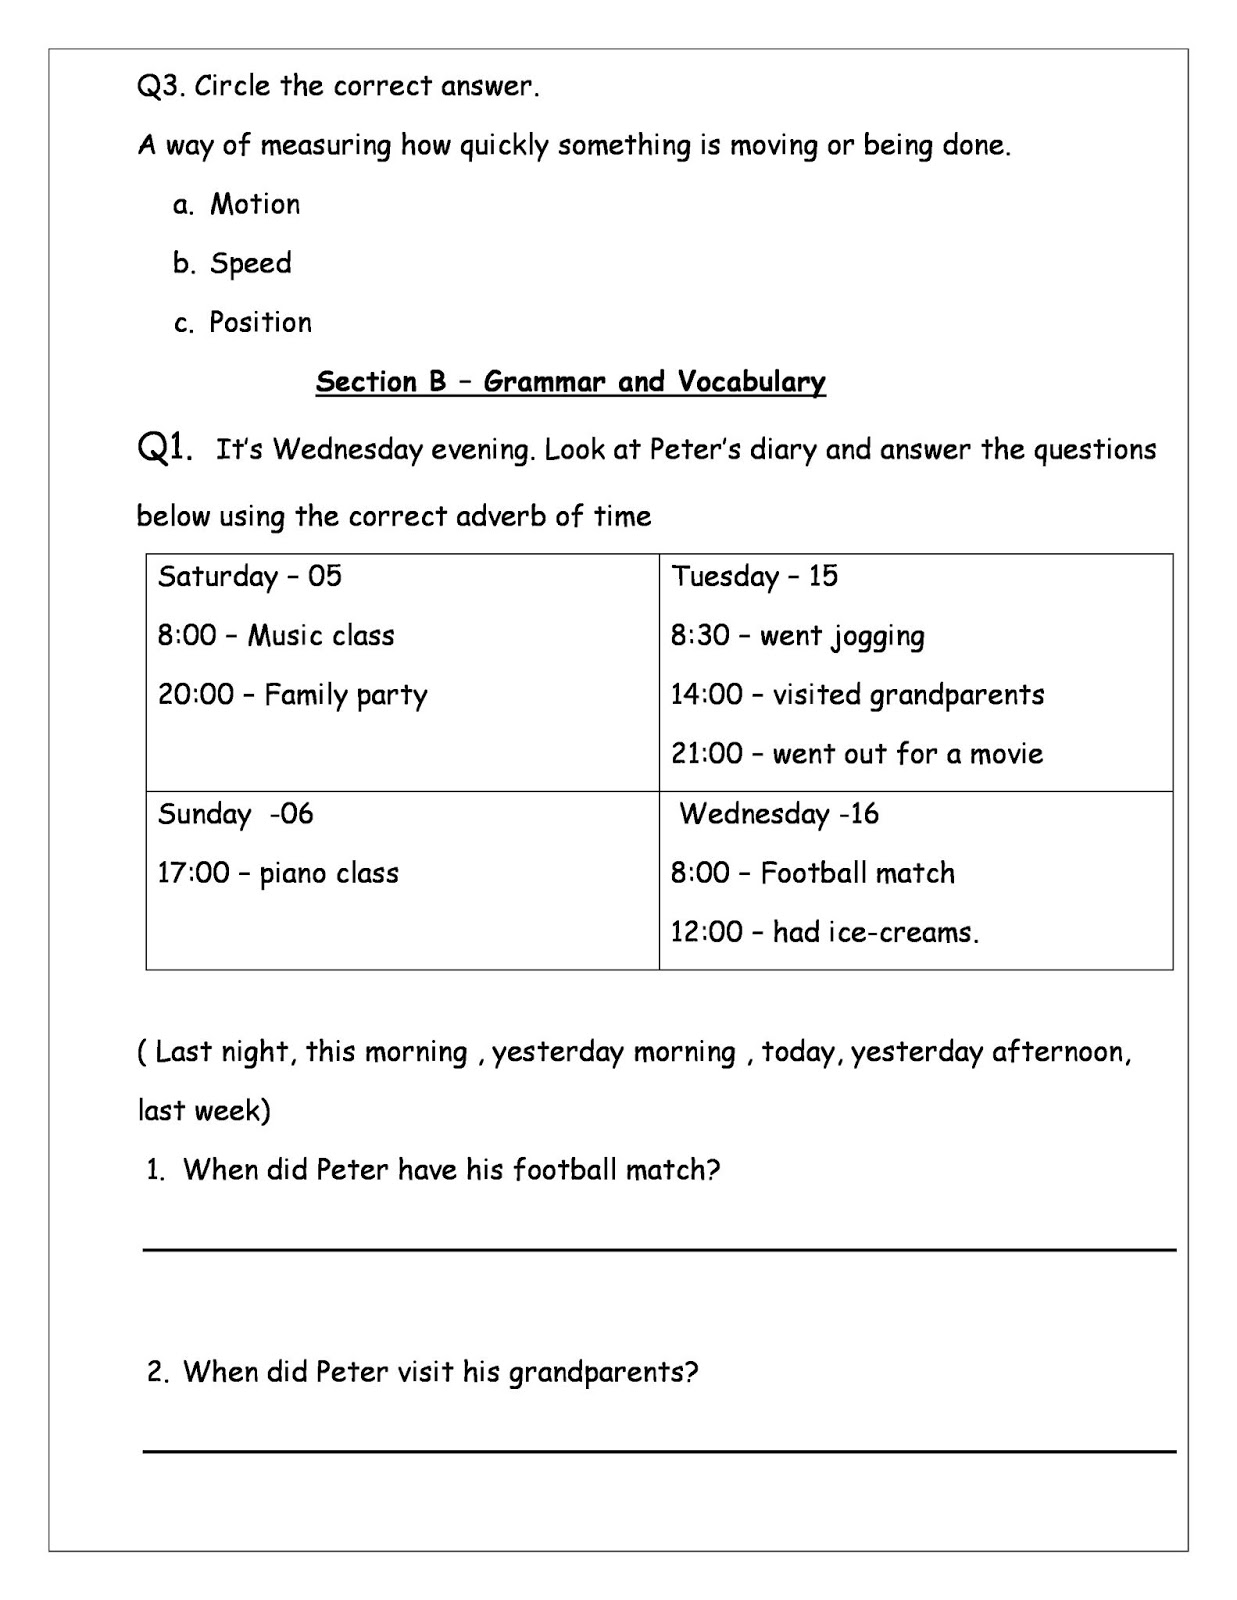 birla-world-school-oman-revision-worksheets-for-grade-2-as-on-12-05-2019